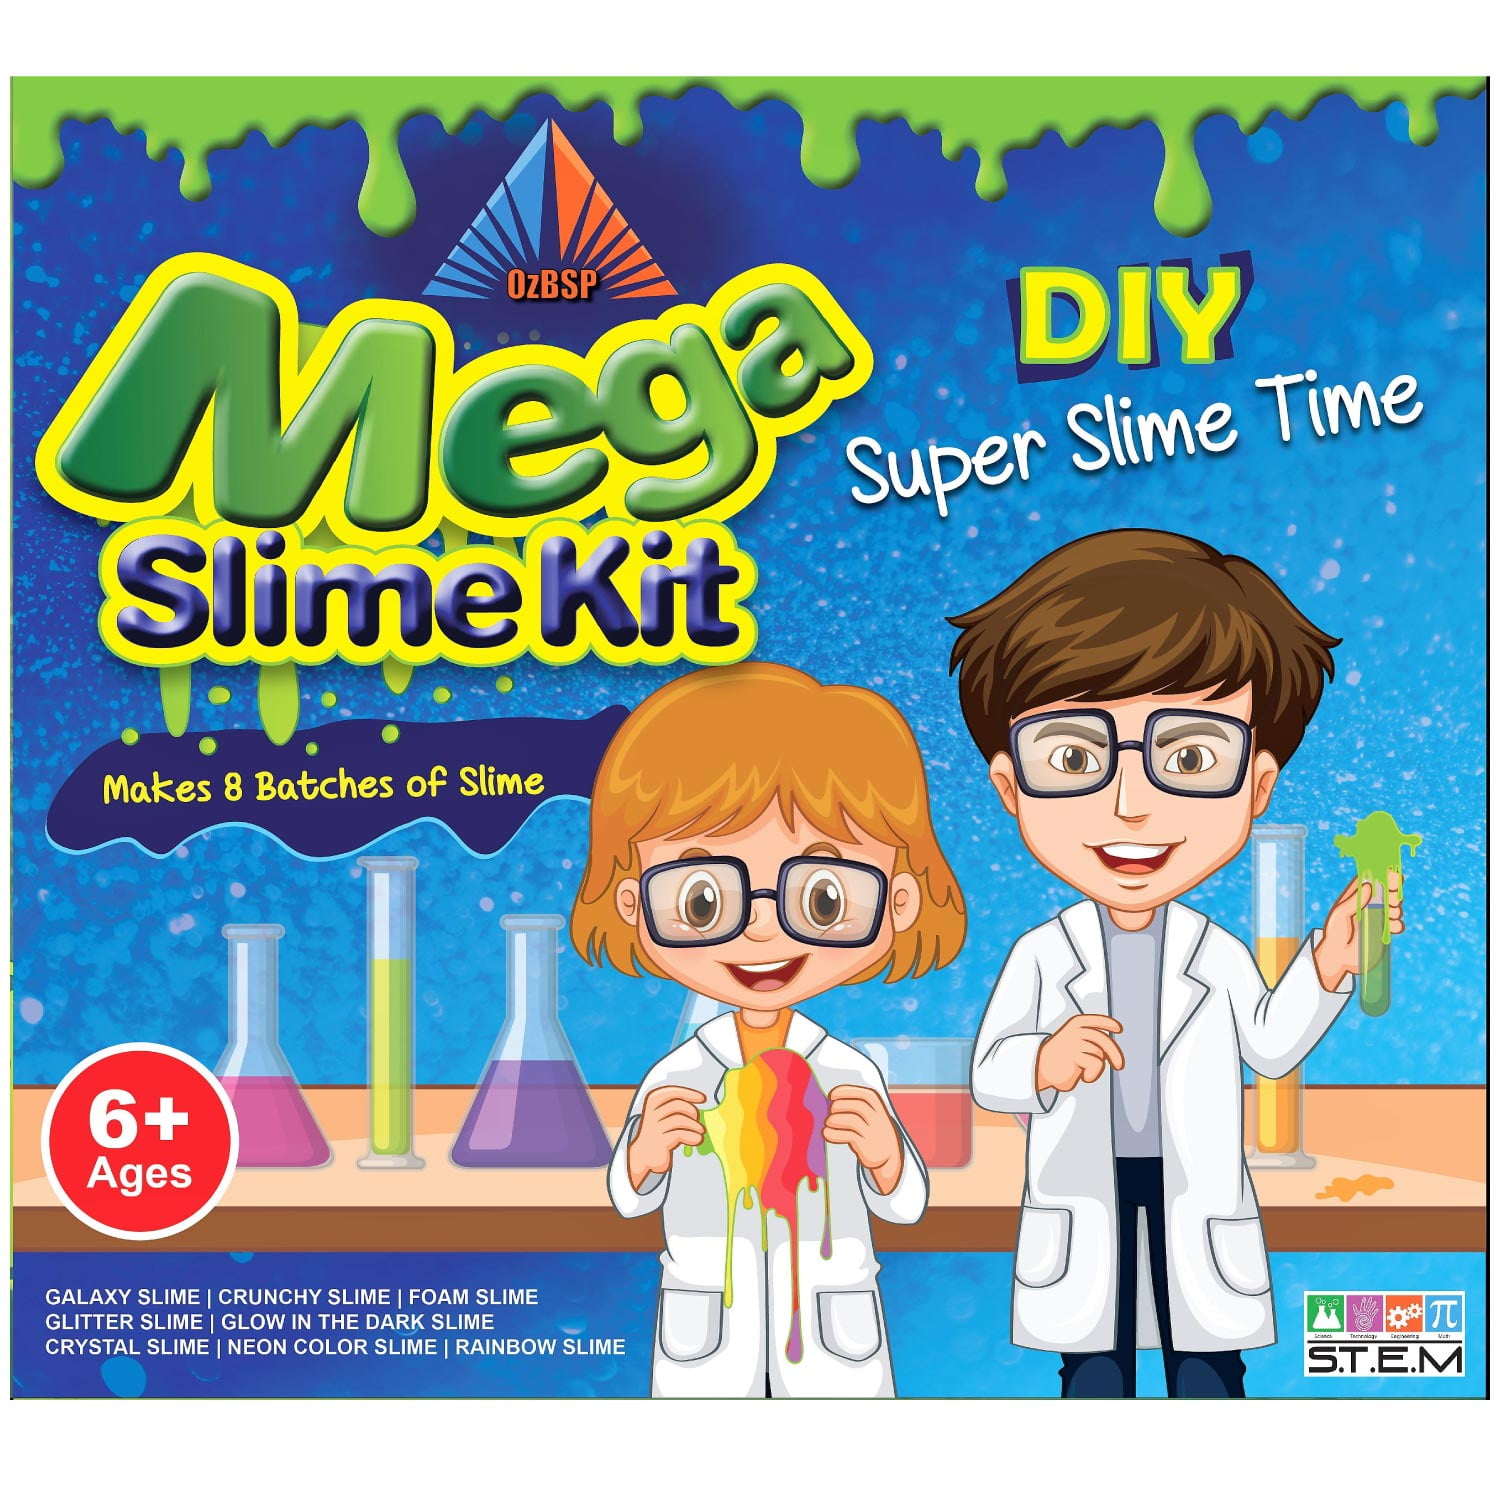 Up To 47% Off on Ultimate DIY Slime Kit for Gi